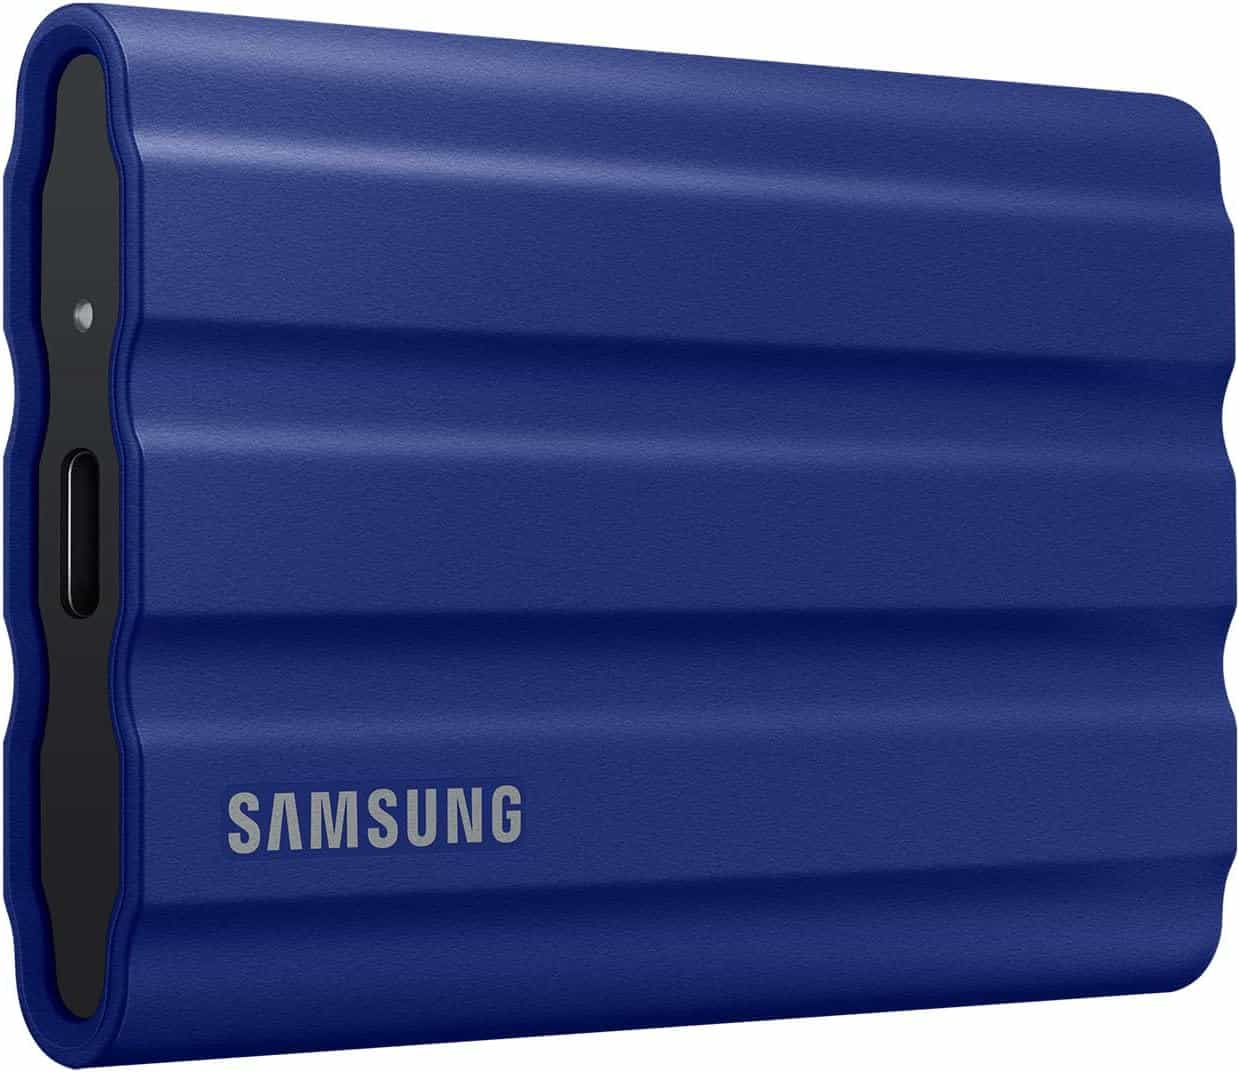 A blue Samsung T7 external hard drive with a shield.